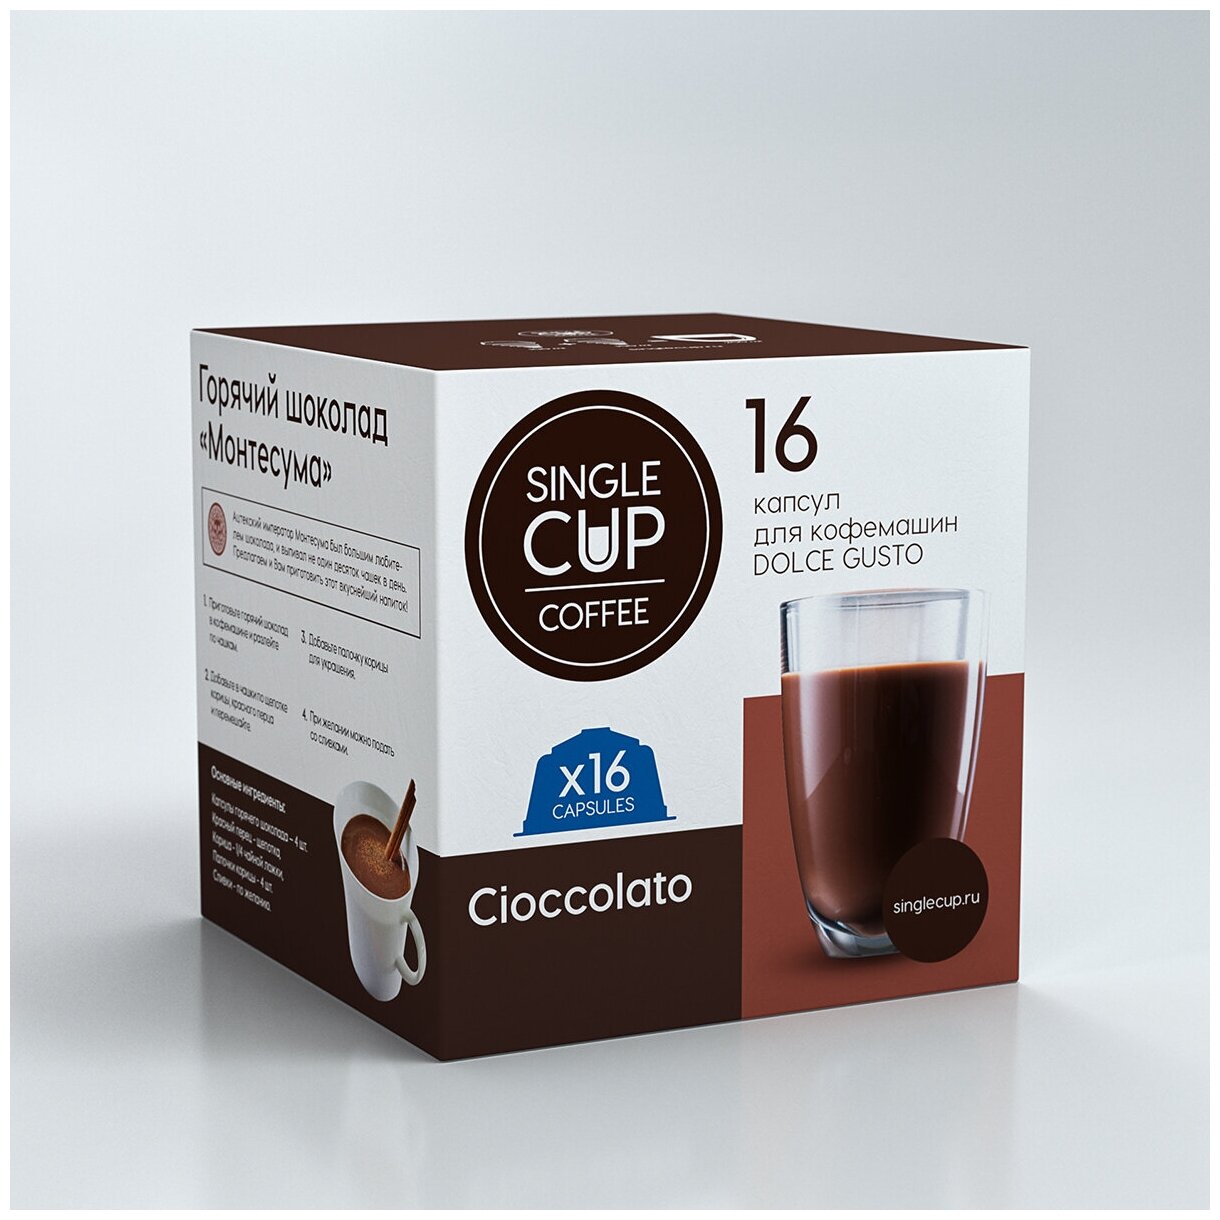 Горячий шоколад в капсулах Single Cup Coffee "Cioccolato" формата Dolce Gusto (Дольче Густо), 16 шт. - фотография № 2